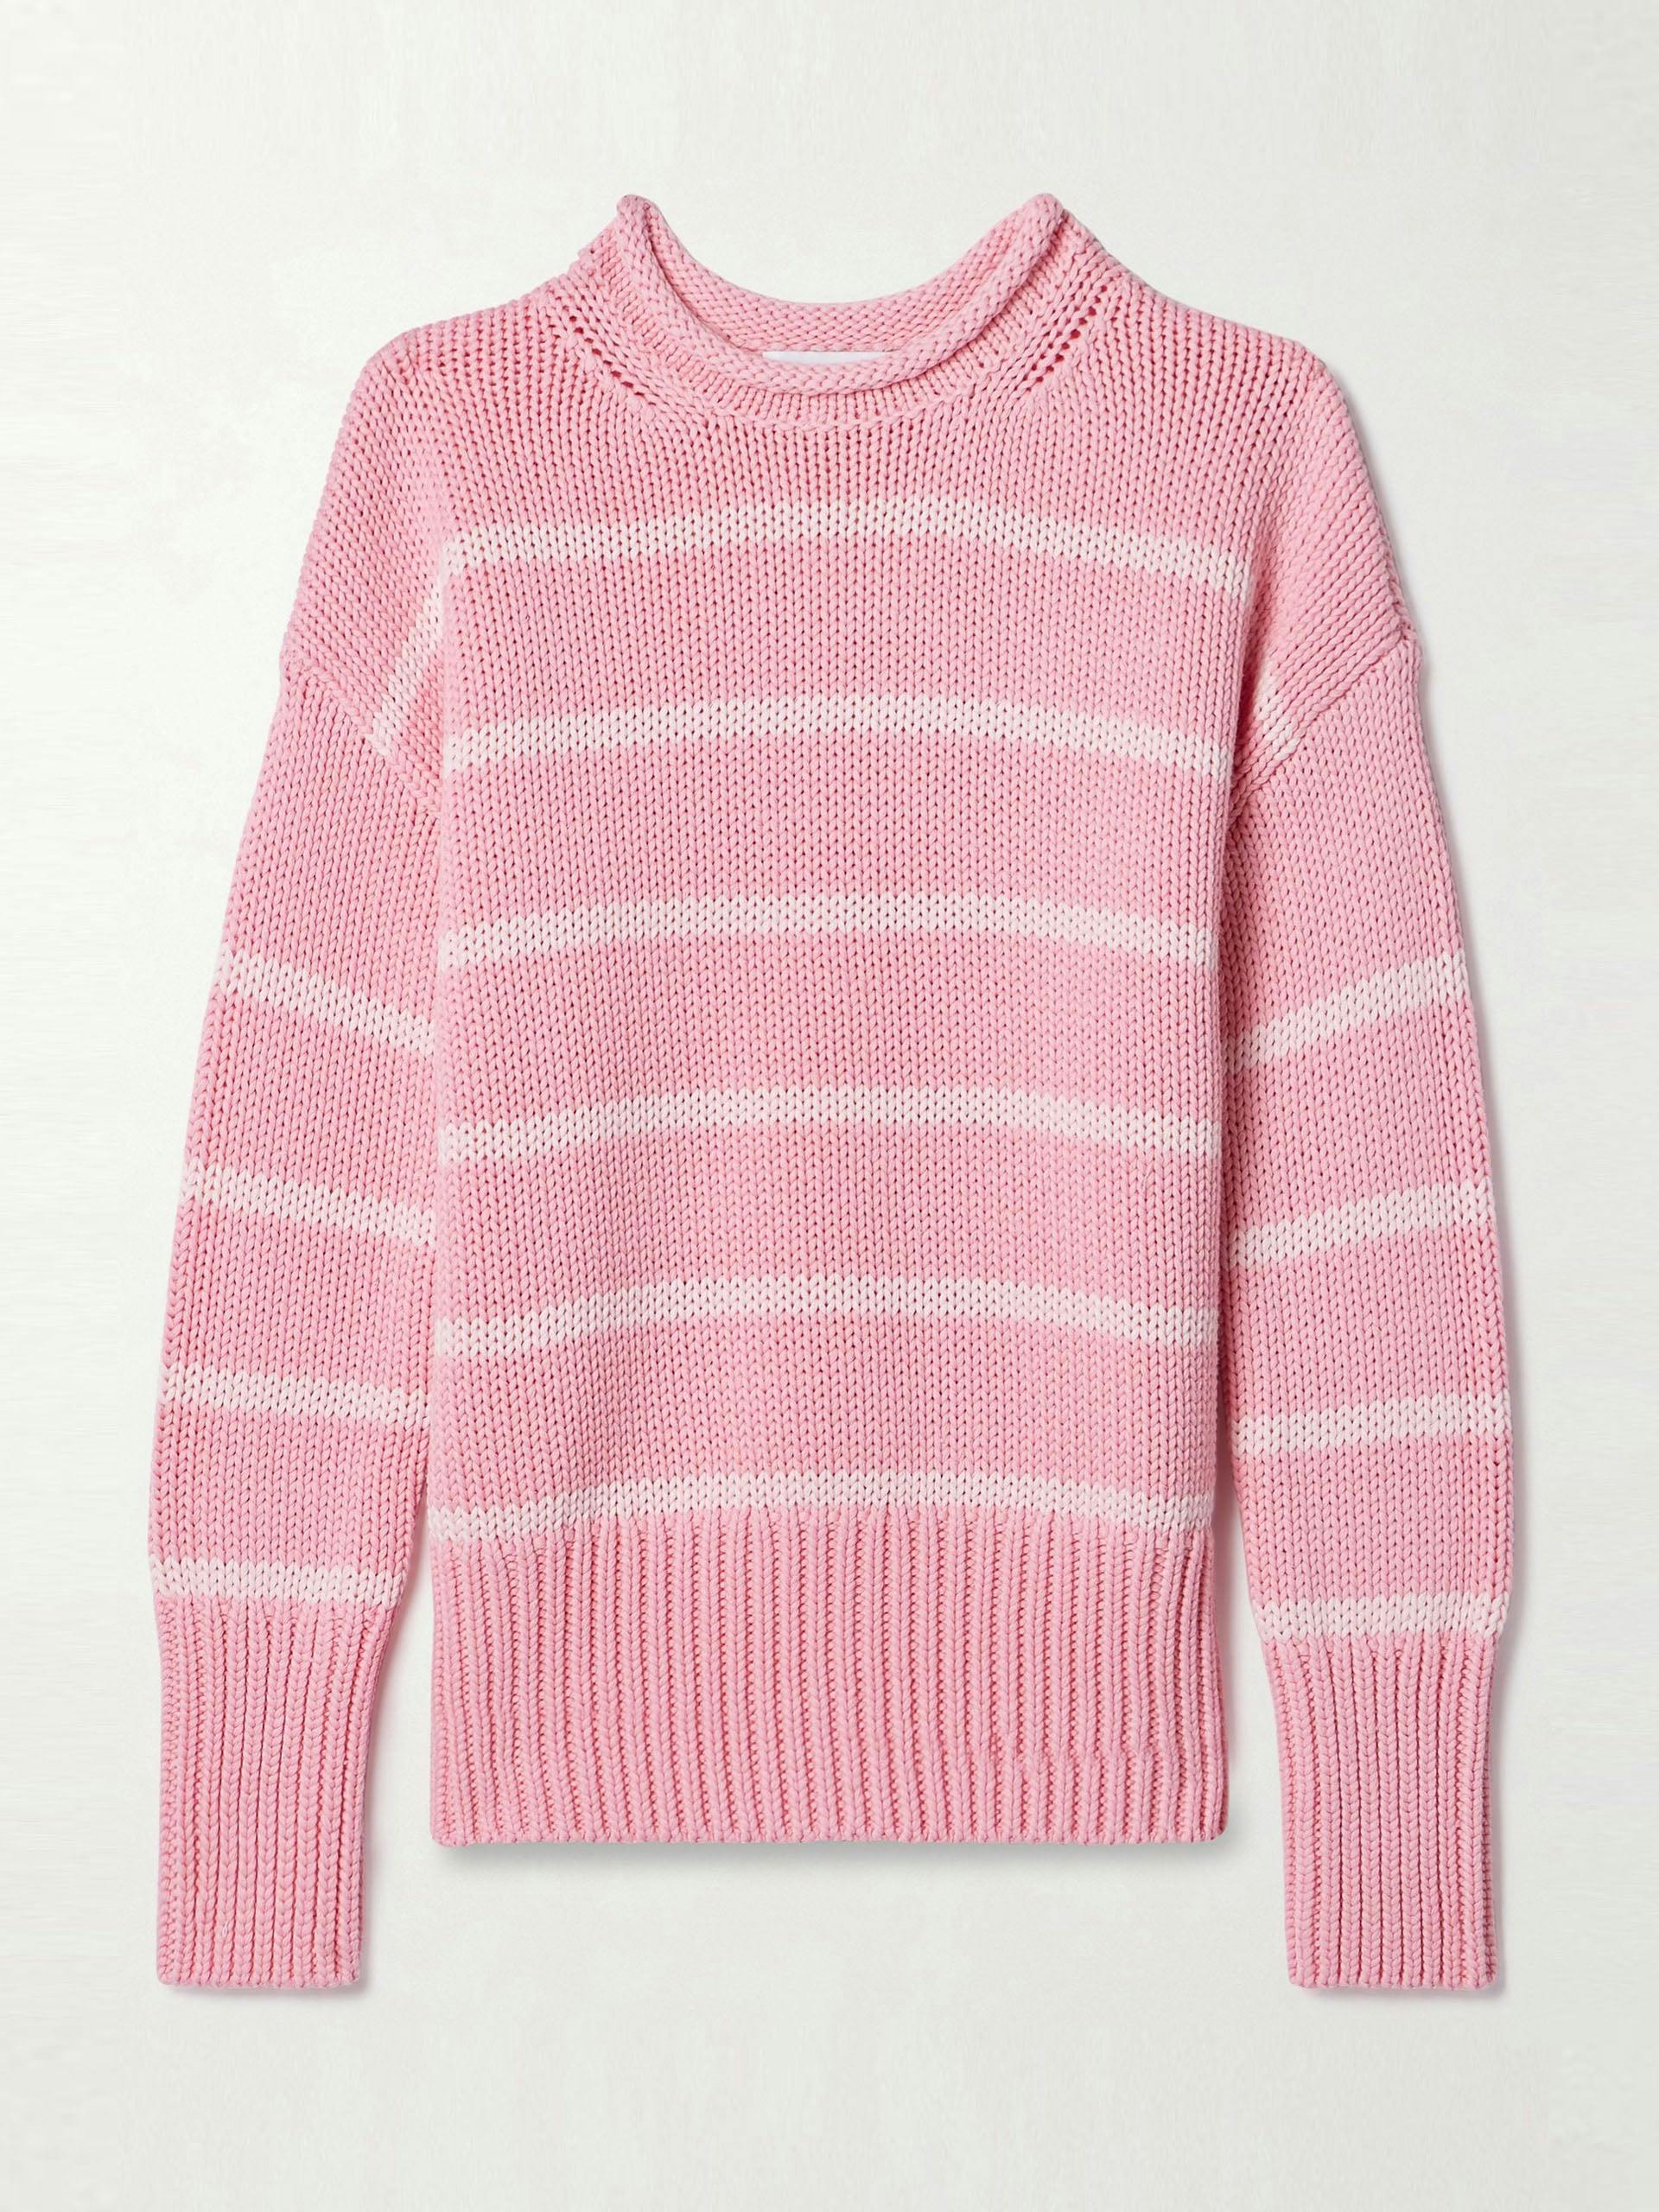 Marina striped cotton sweater